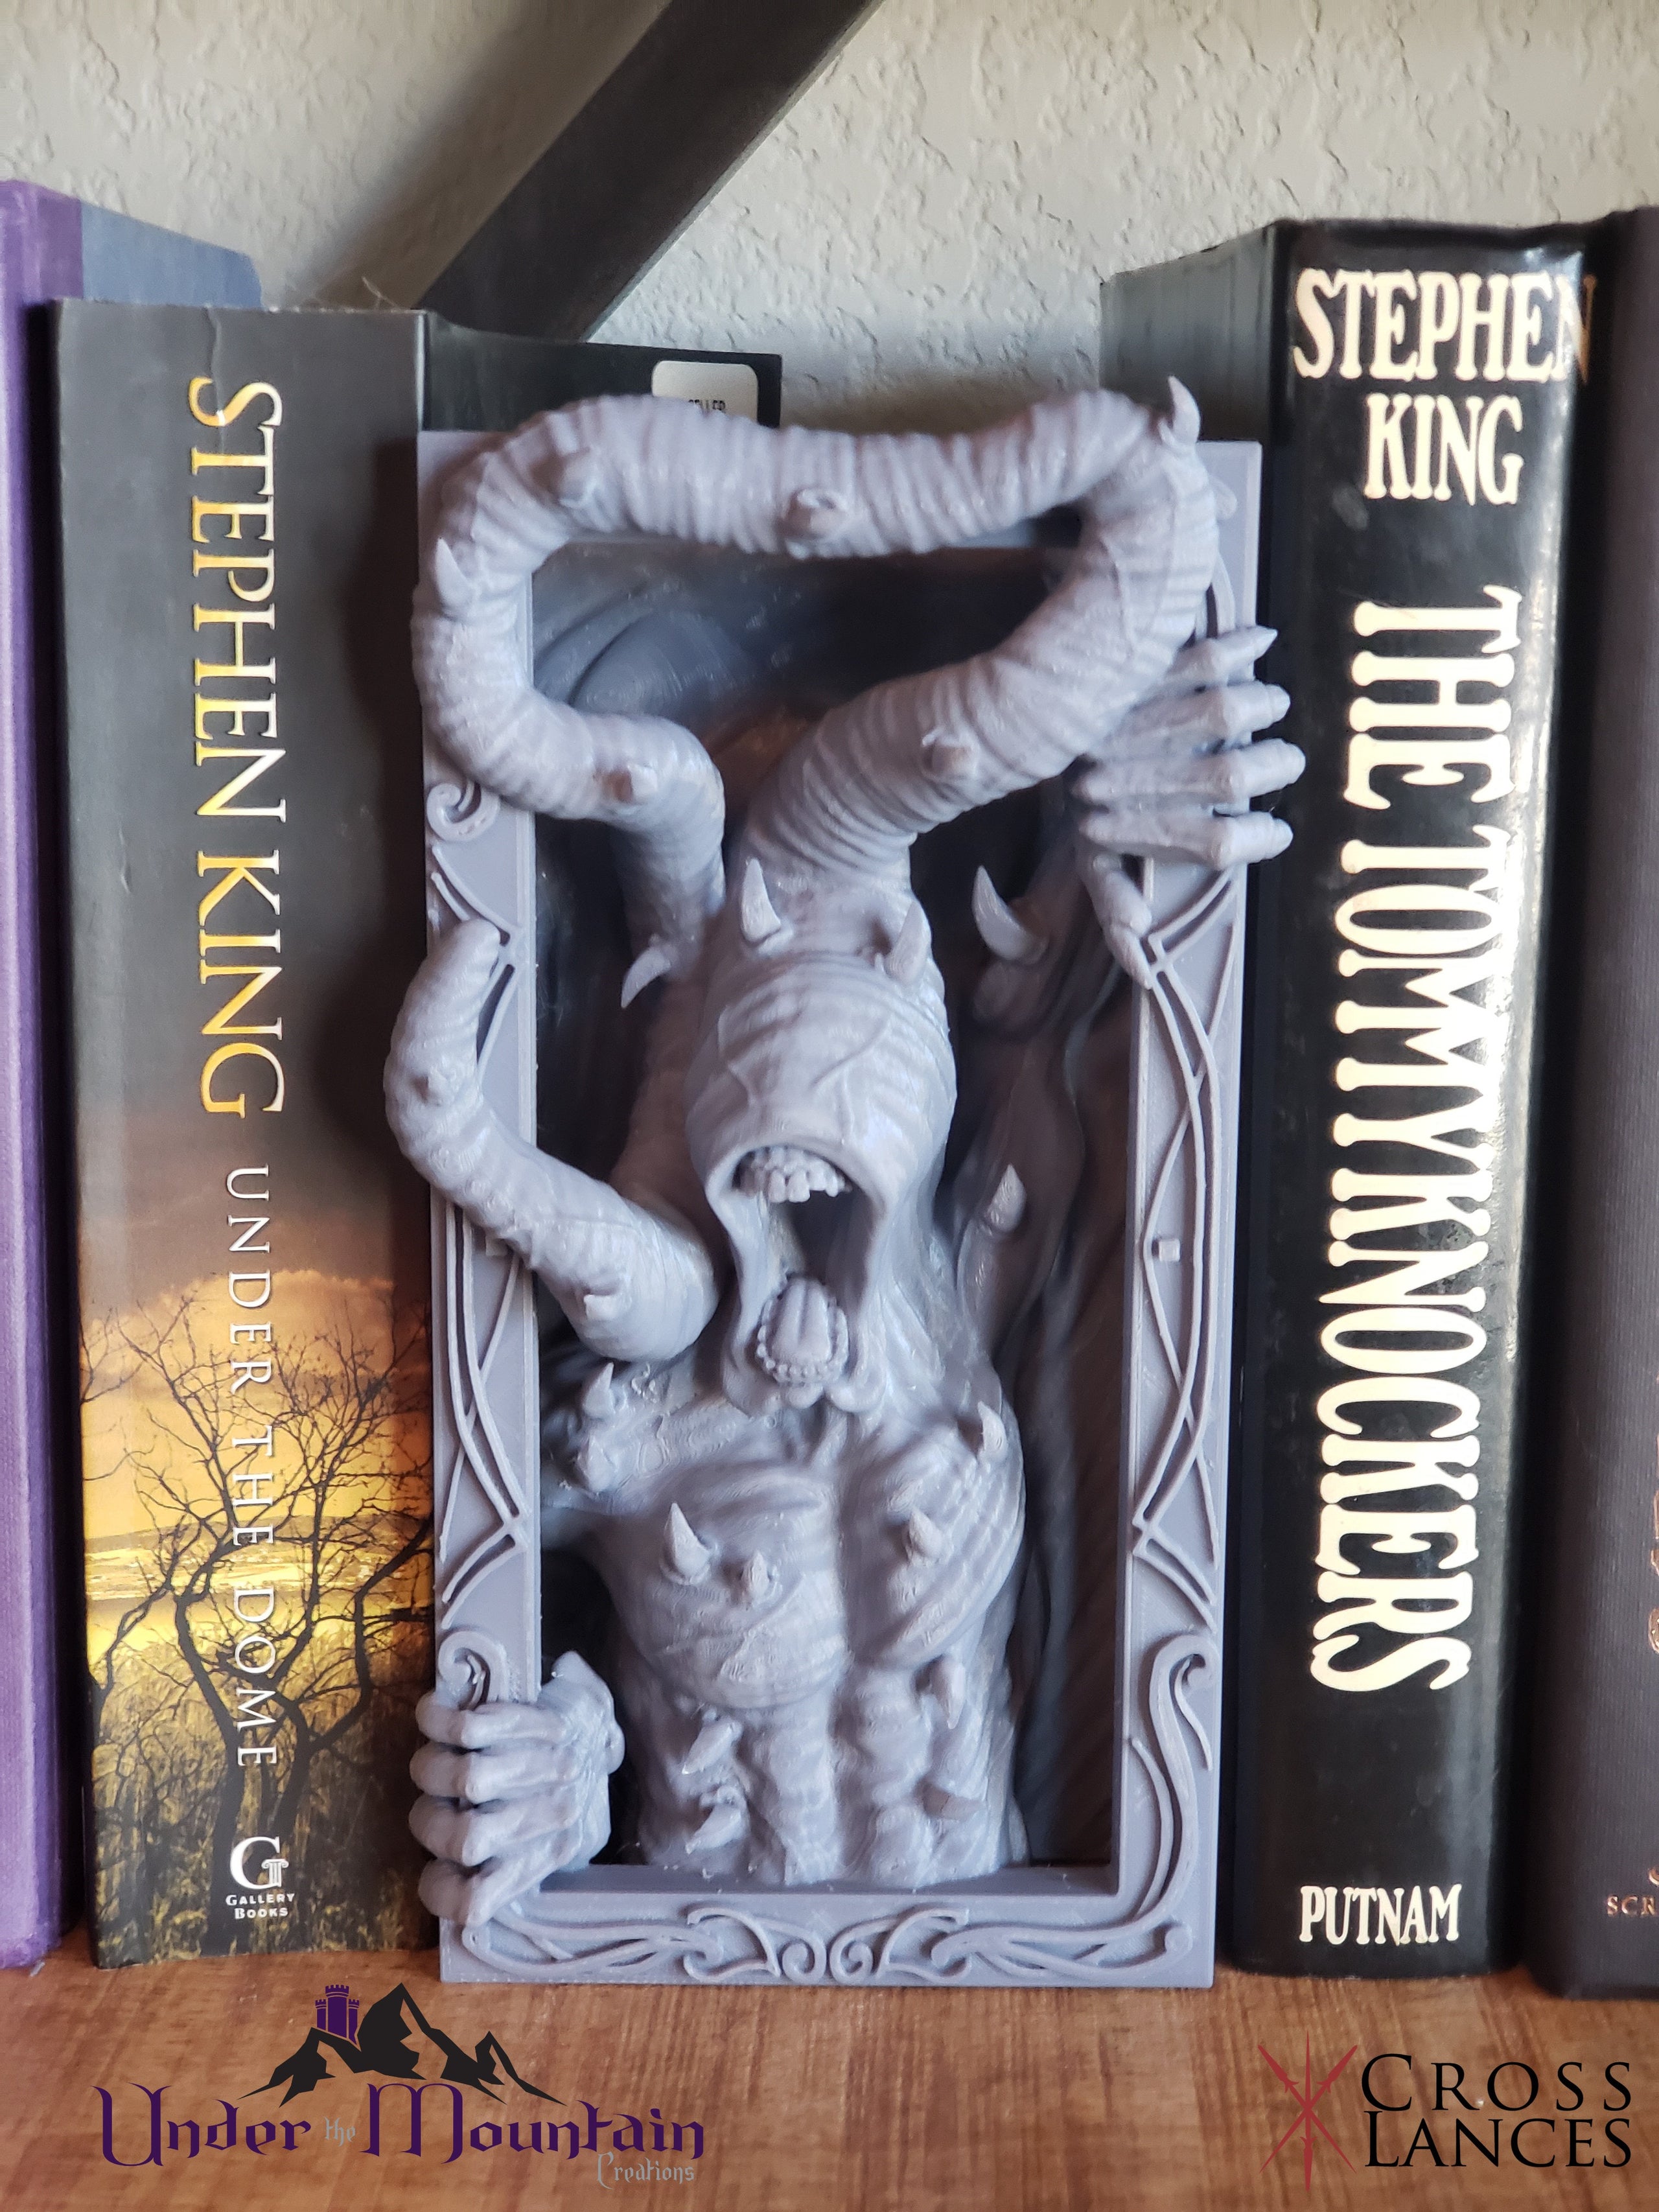 Lovecraft Monster Book Nook Designed by Cross Lances